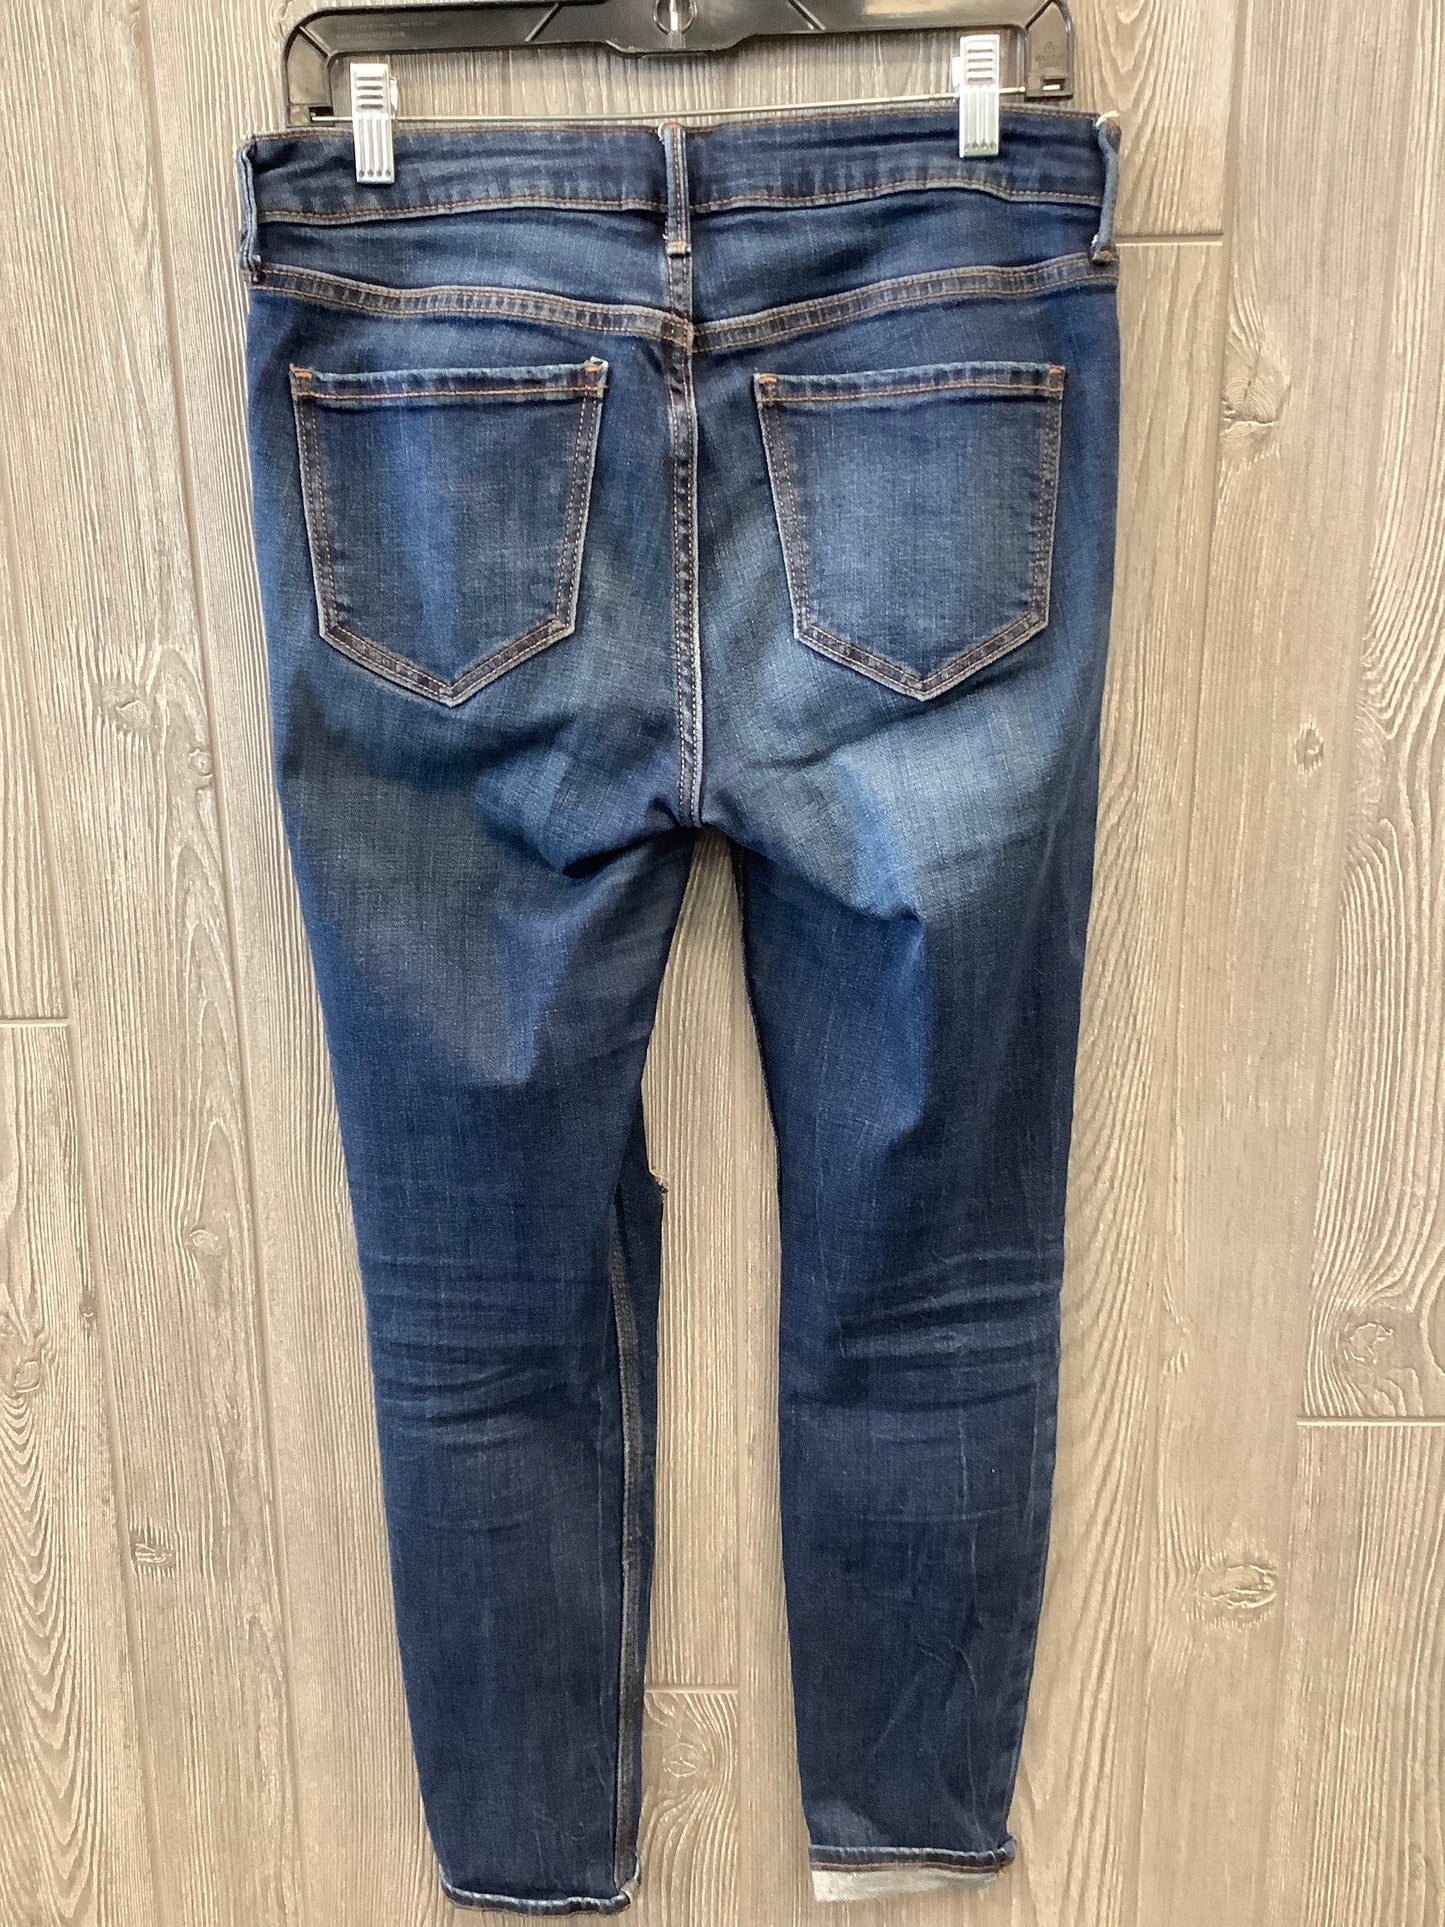 Blue Denim Jeans Skinny Old Navy, Size 8